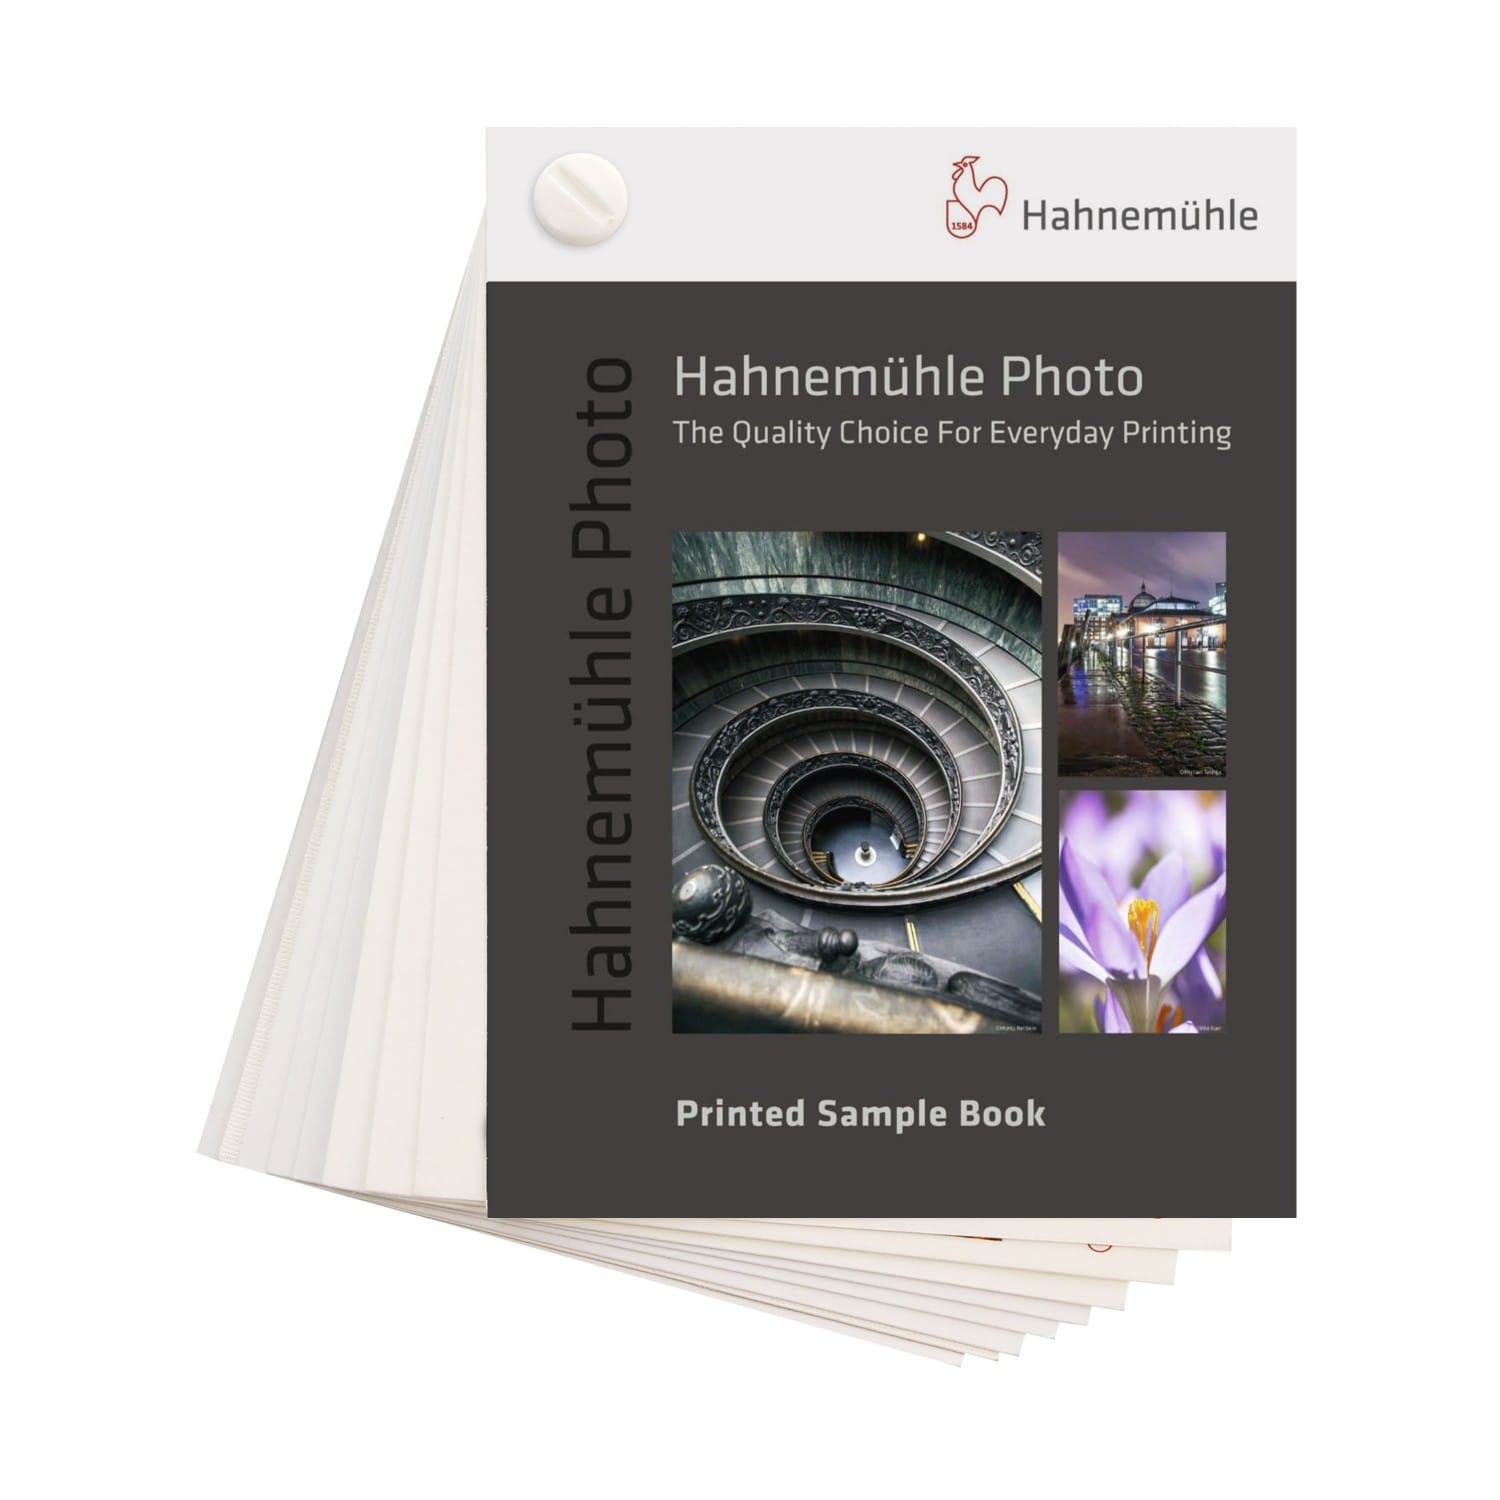 Papier jet d'encre HAHNEMÜHLE Printed Sample Book - Collection Hahnemühle Photo - Format A6